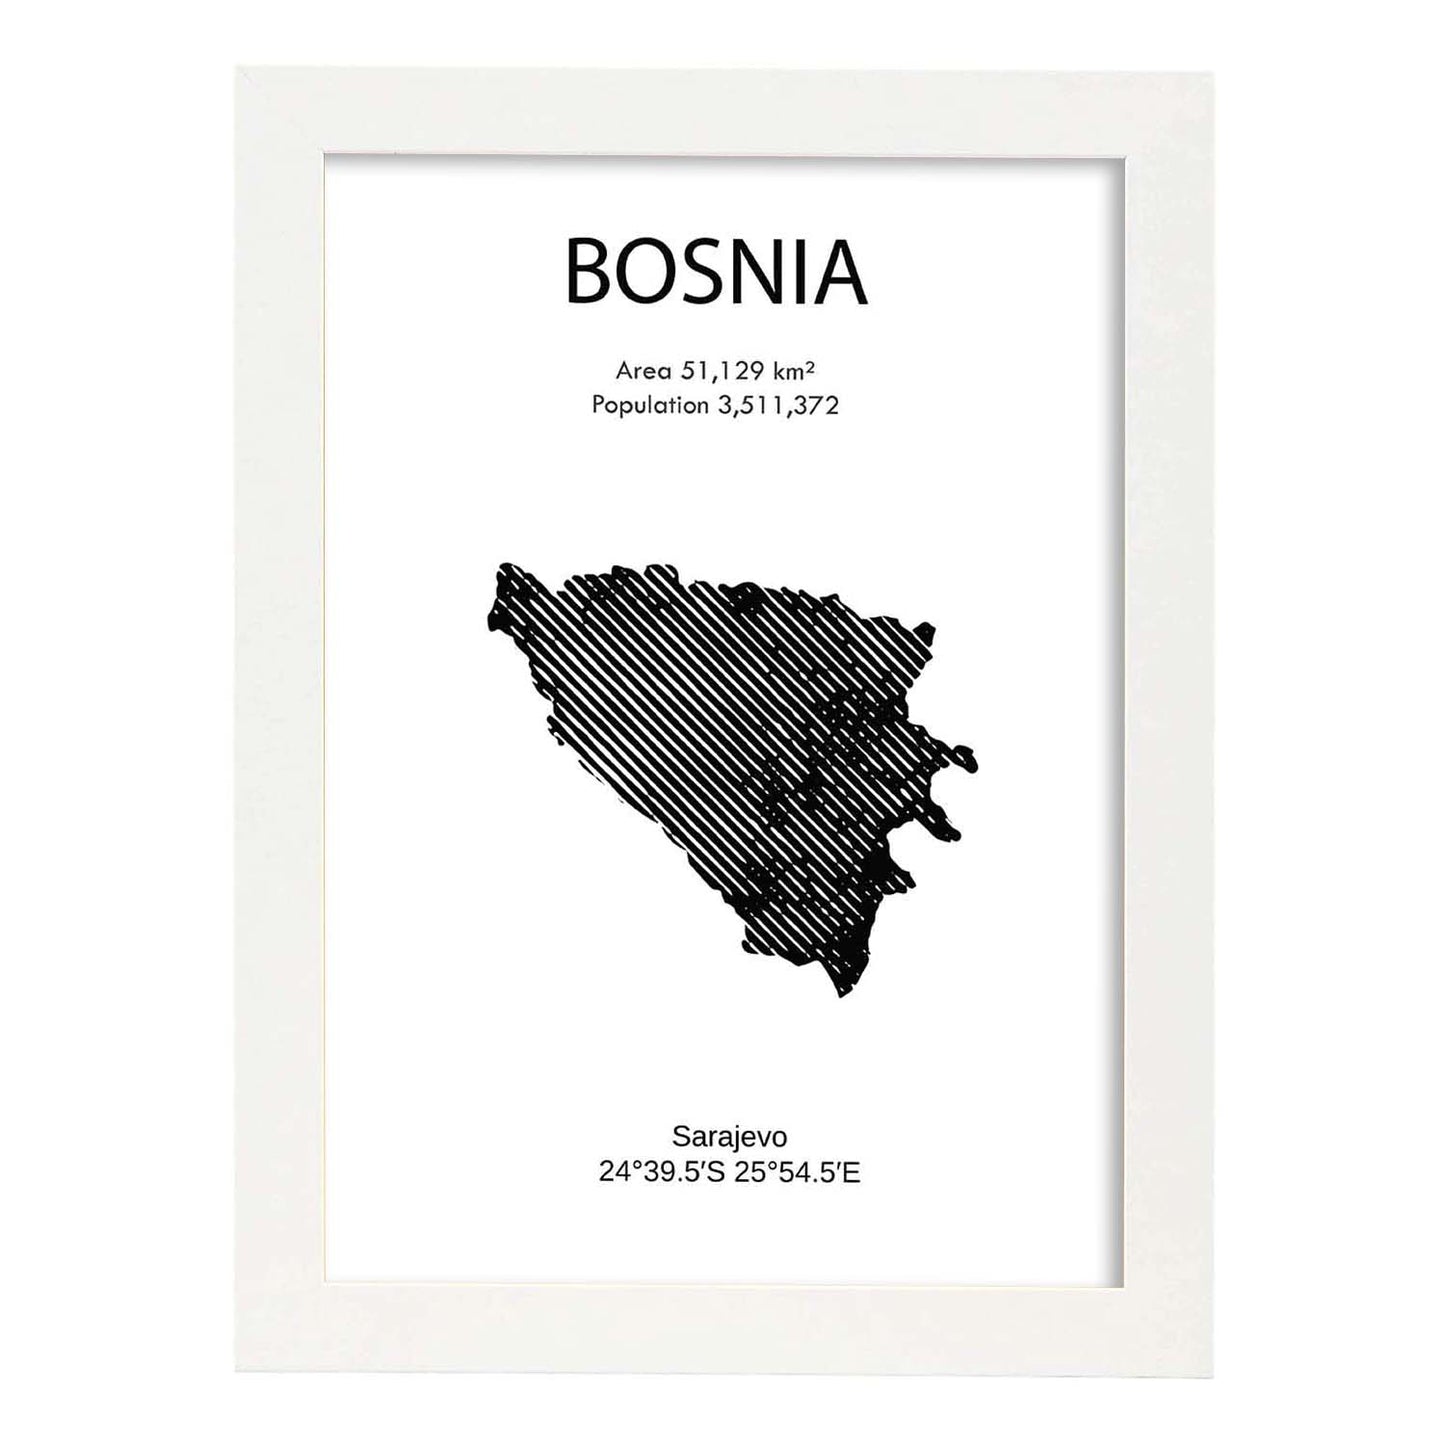 Poster de Bosnia. Láminas de paises y continentes del mundo.-Artwork-Nacnic-A4-Marco Blanco-Nacnic Estudio SL